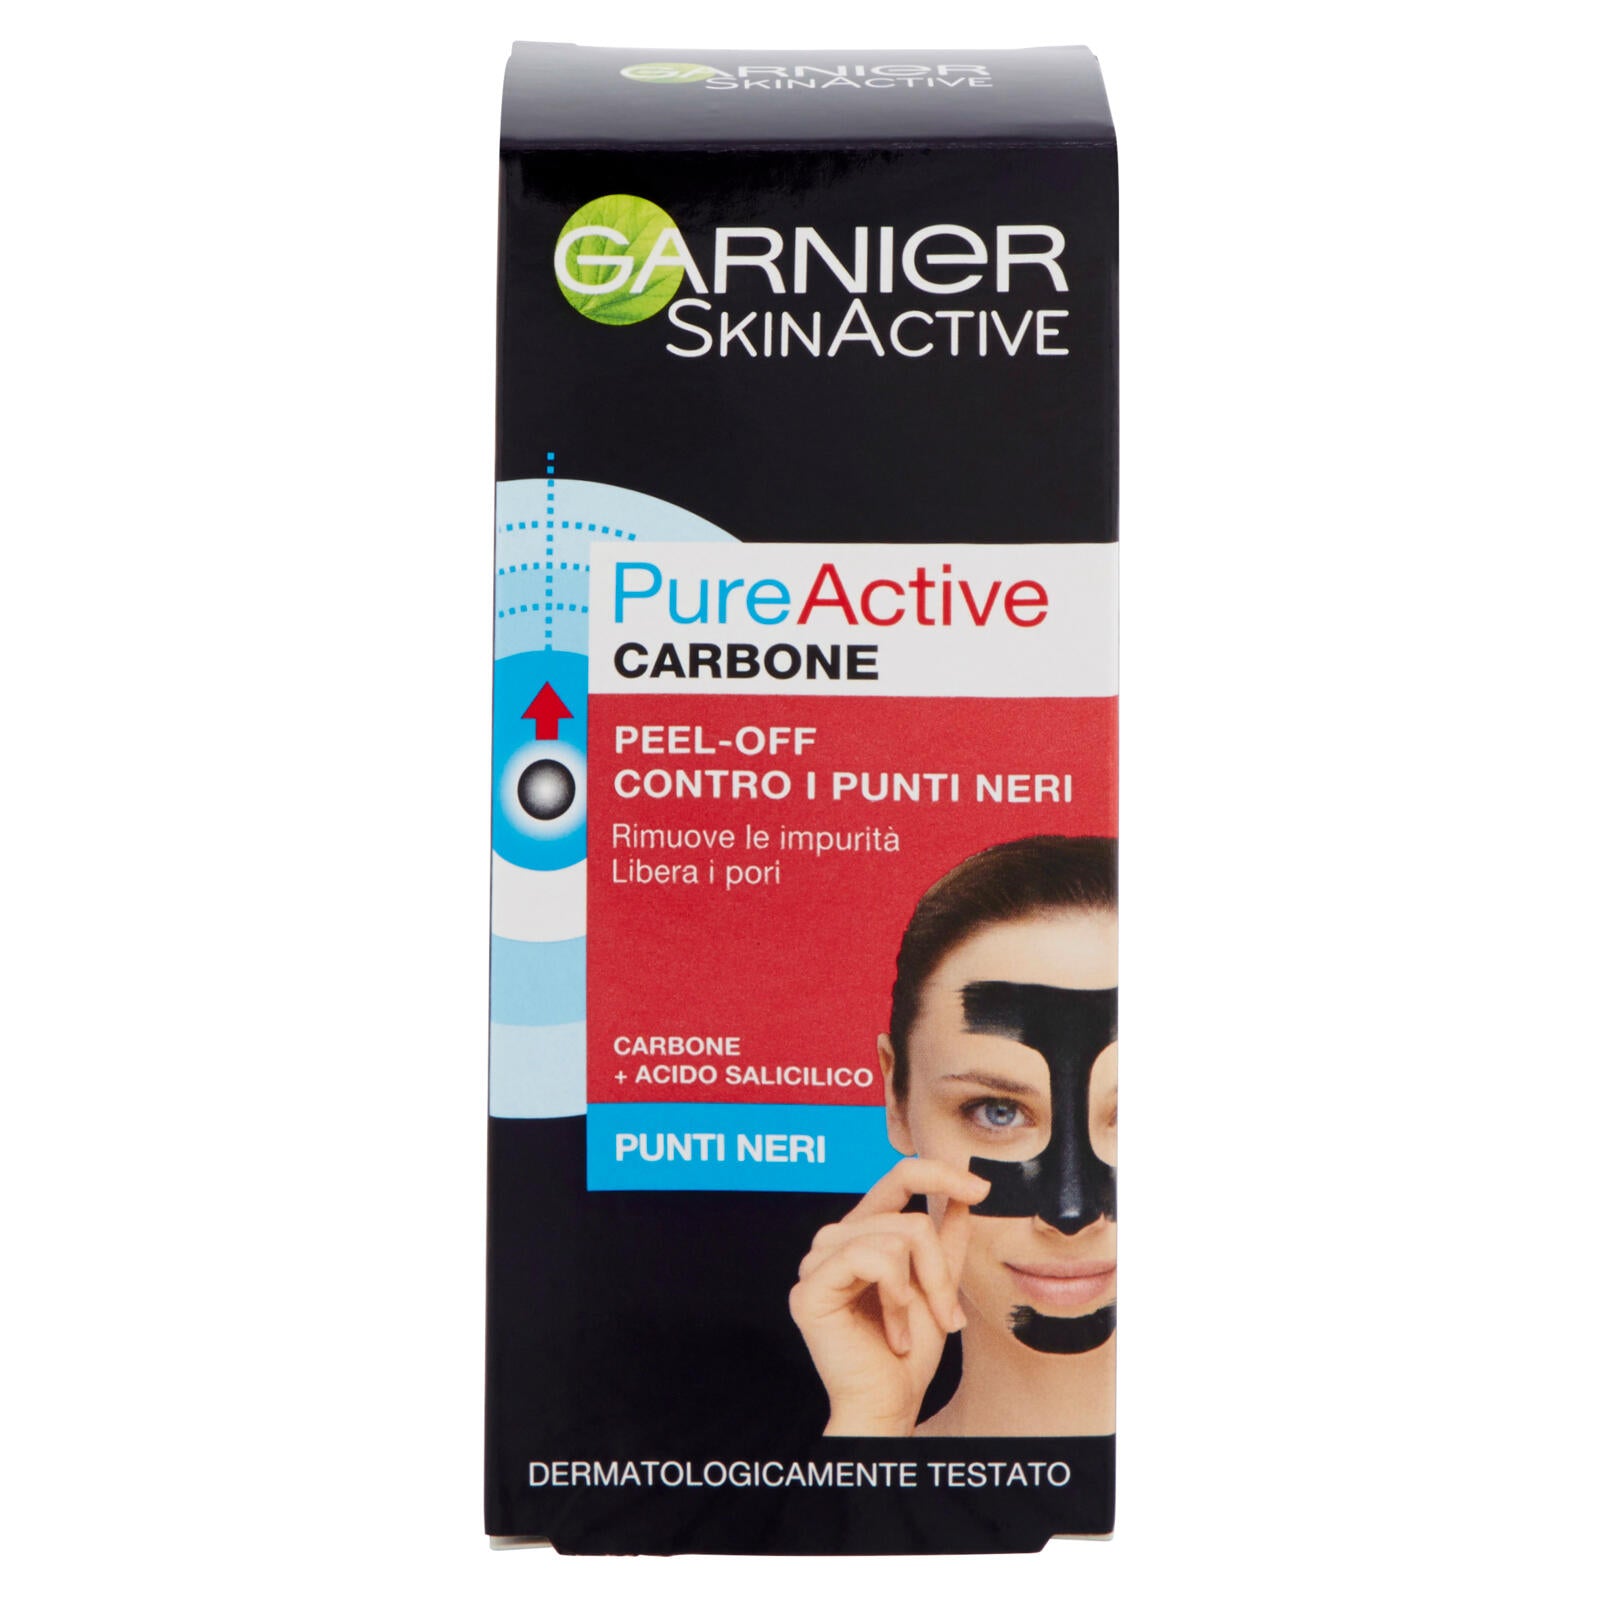 Garnier Skincare Maschera Peel Off contro i Punti Neri,Gel Detergente con Carbone e Acido Salicidico